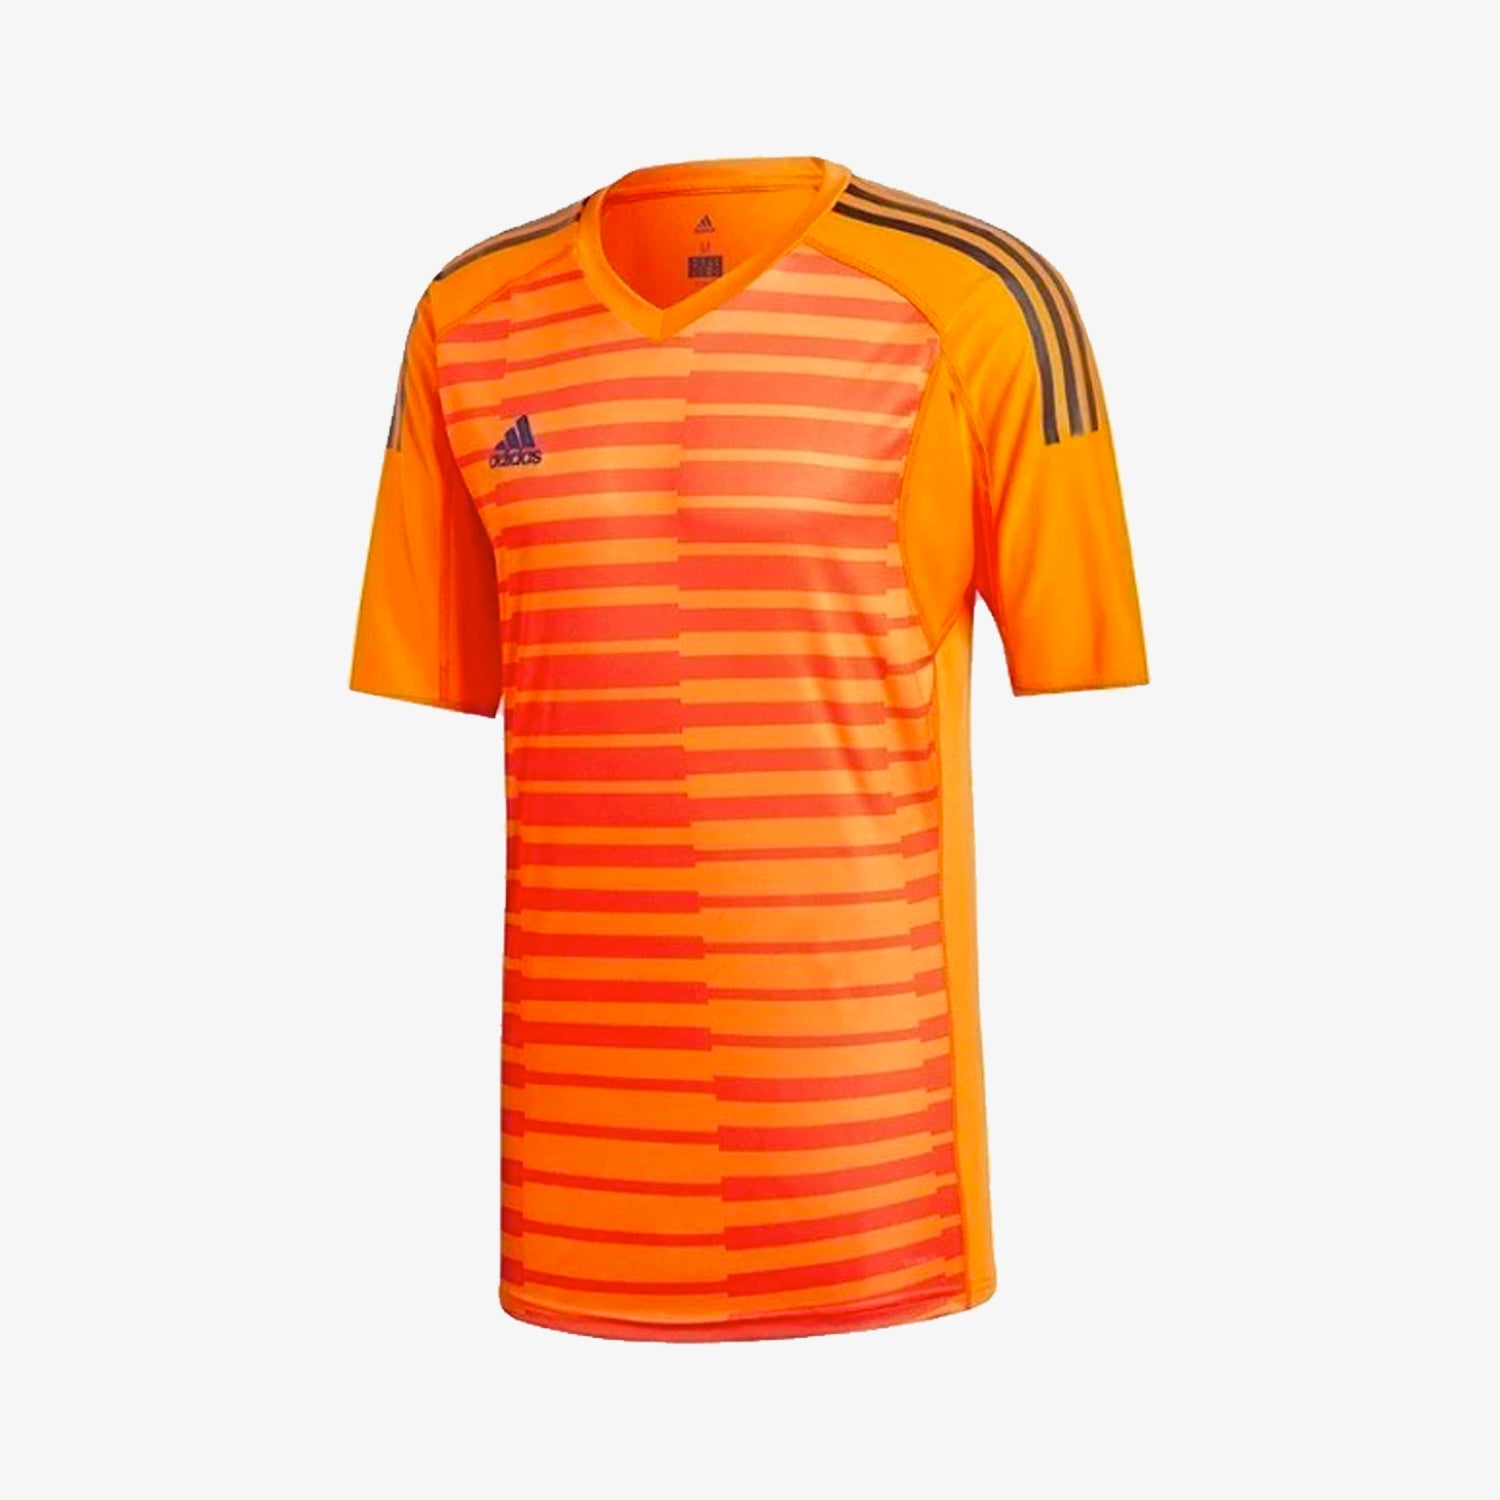 adidas adipro 18 goalkeeper kit